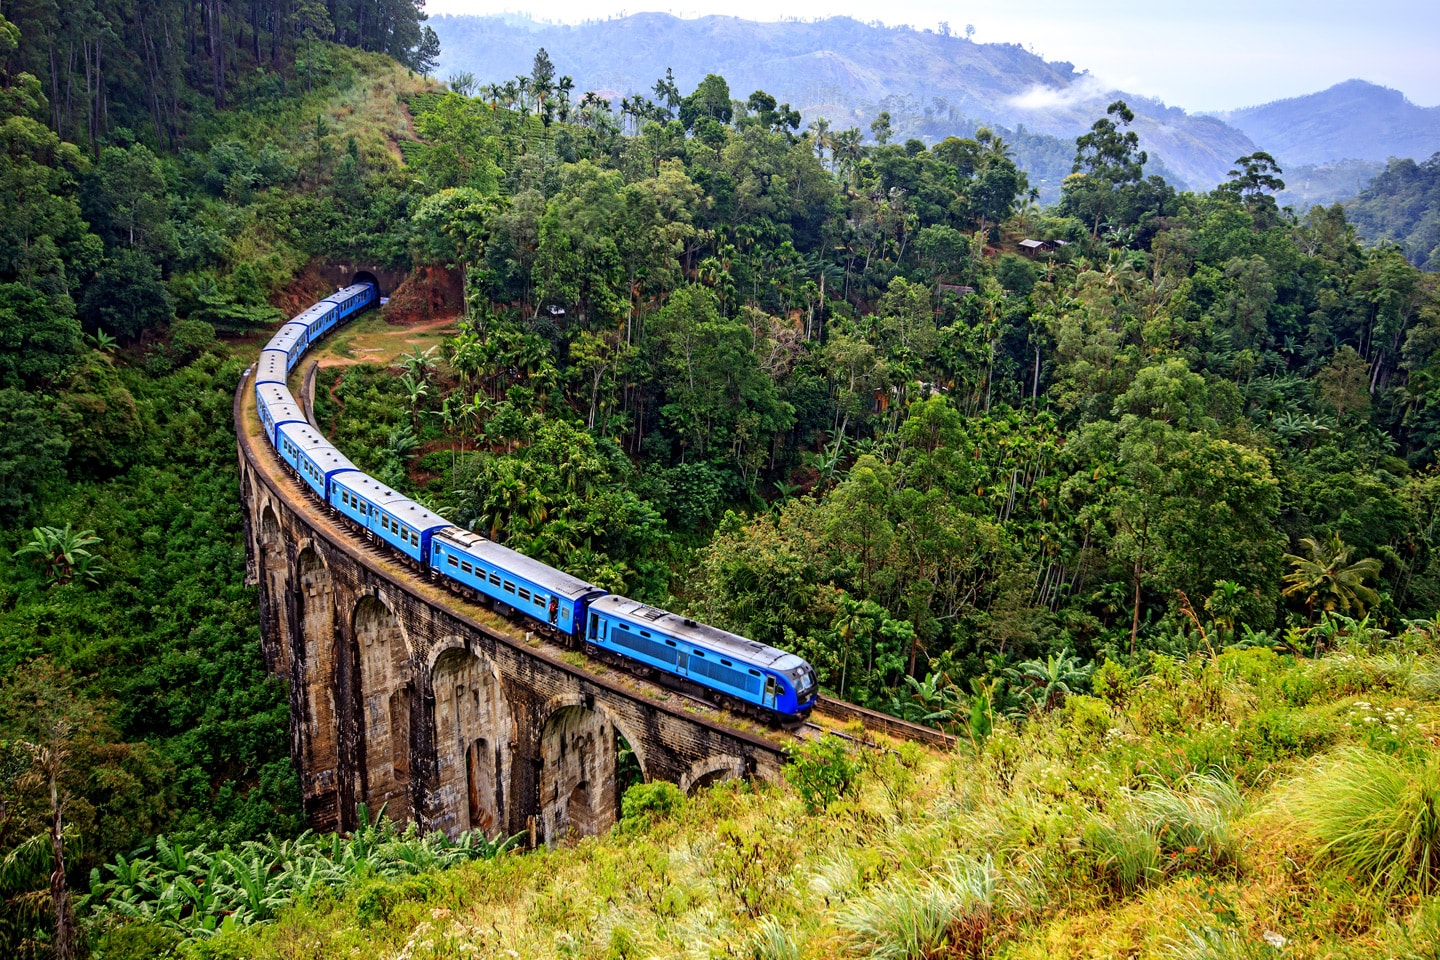 Train on the Nine Arch Bridge in Sri Lanka